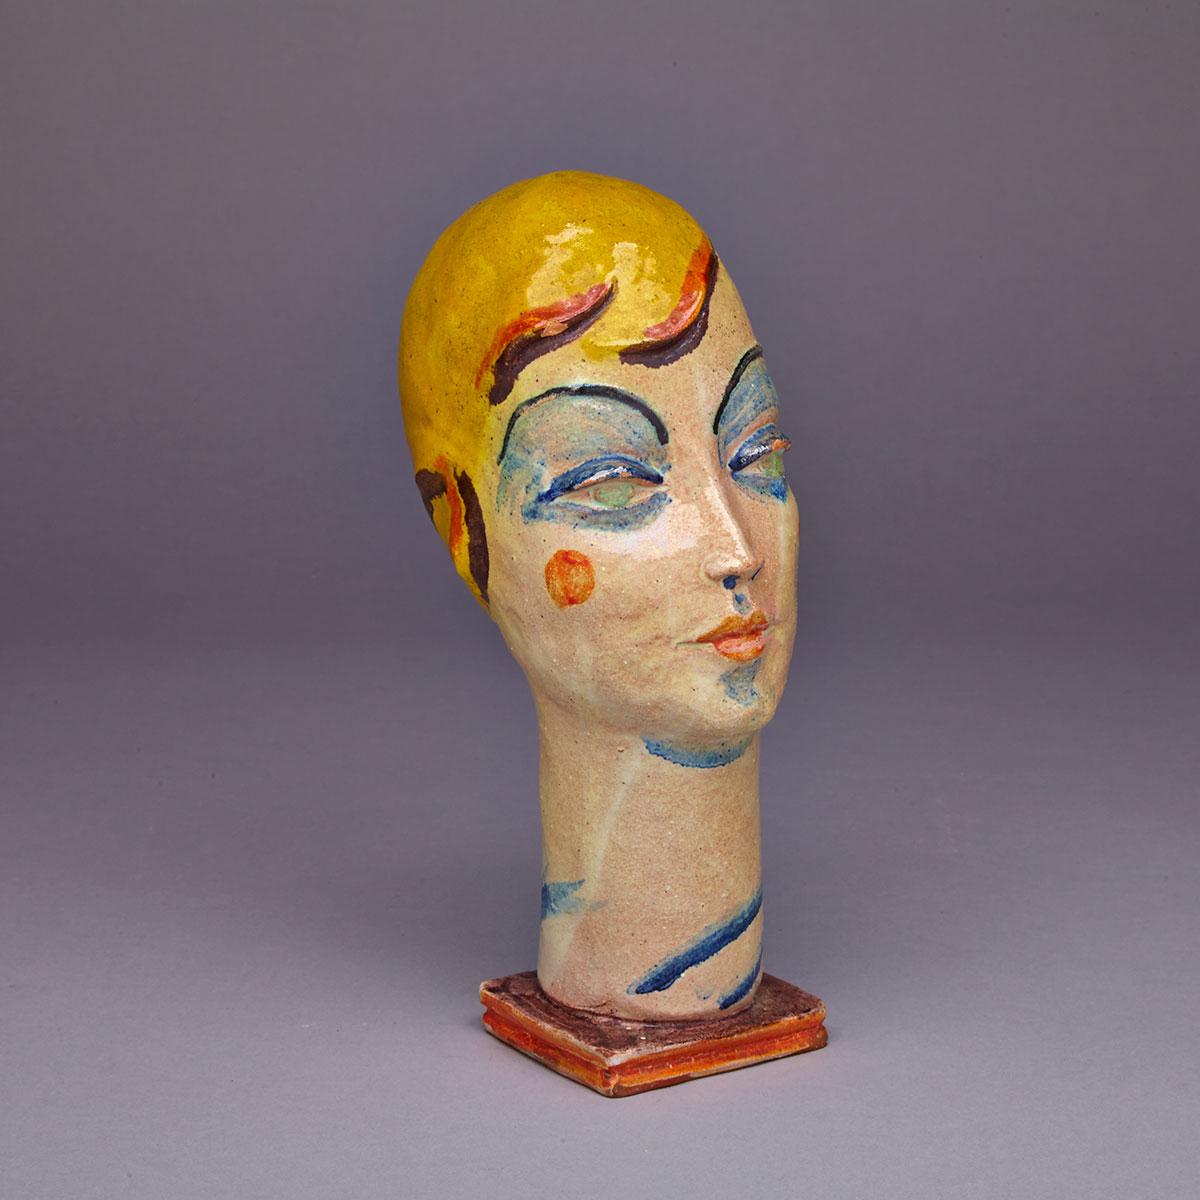 Wiener Werkstätte Glazed Terra Cotta Head of a Woman, Gudrun Baudisch-Wittke, c.1927